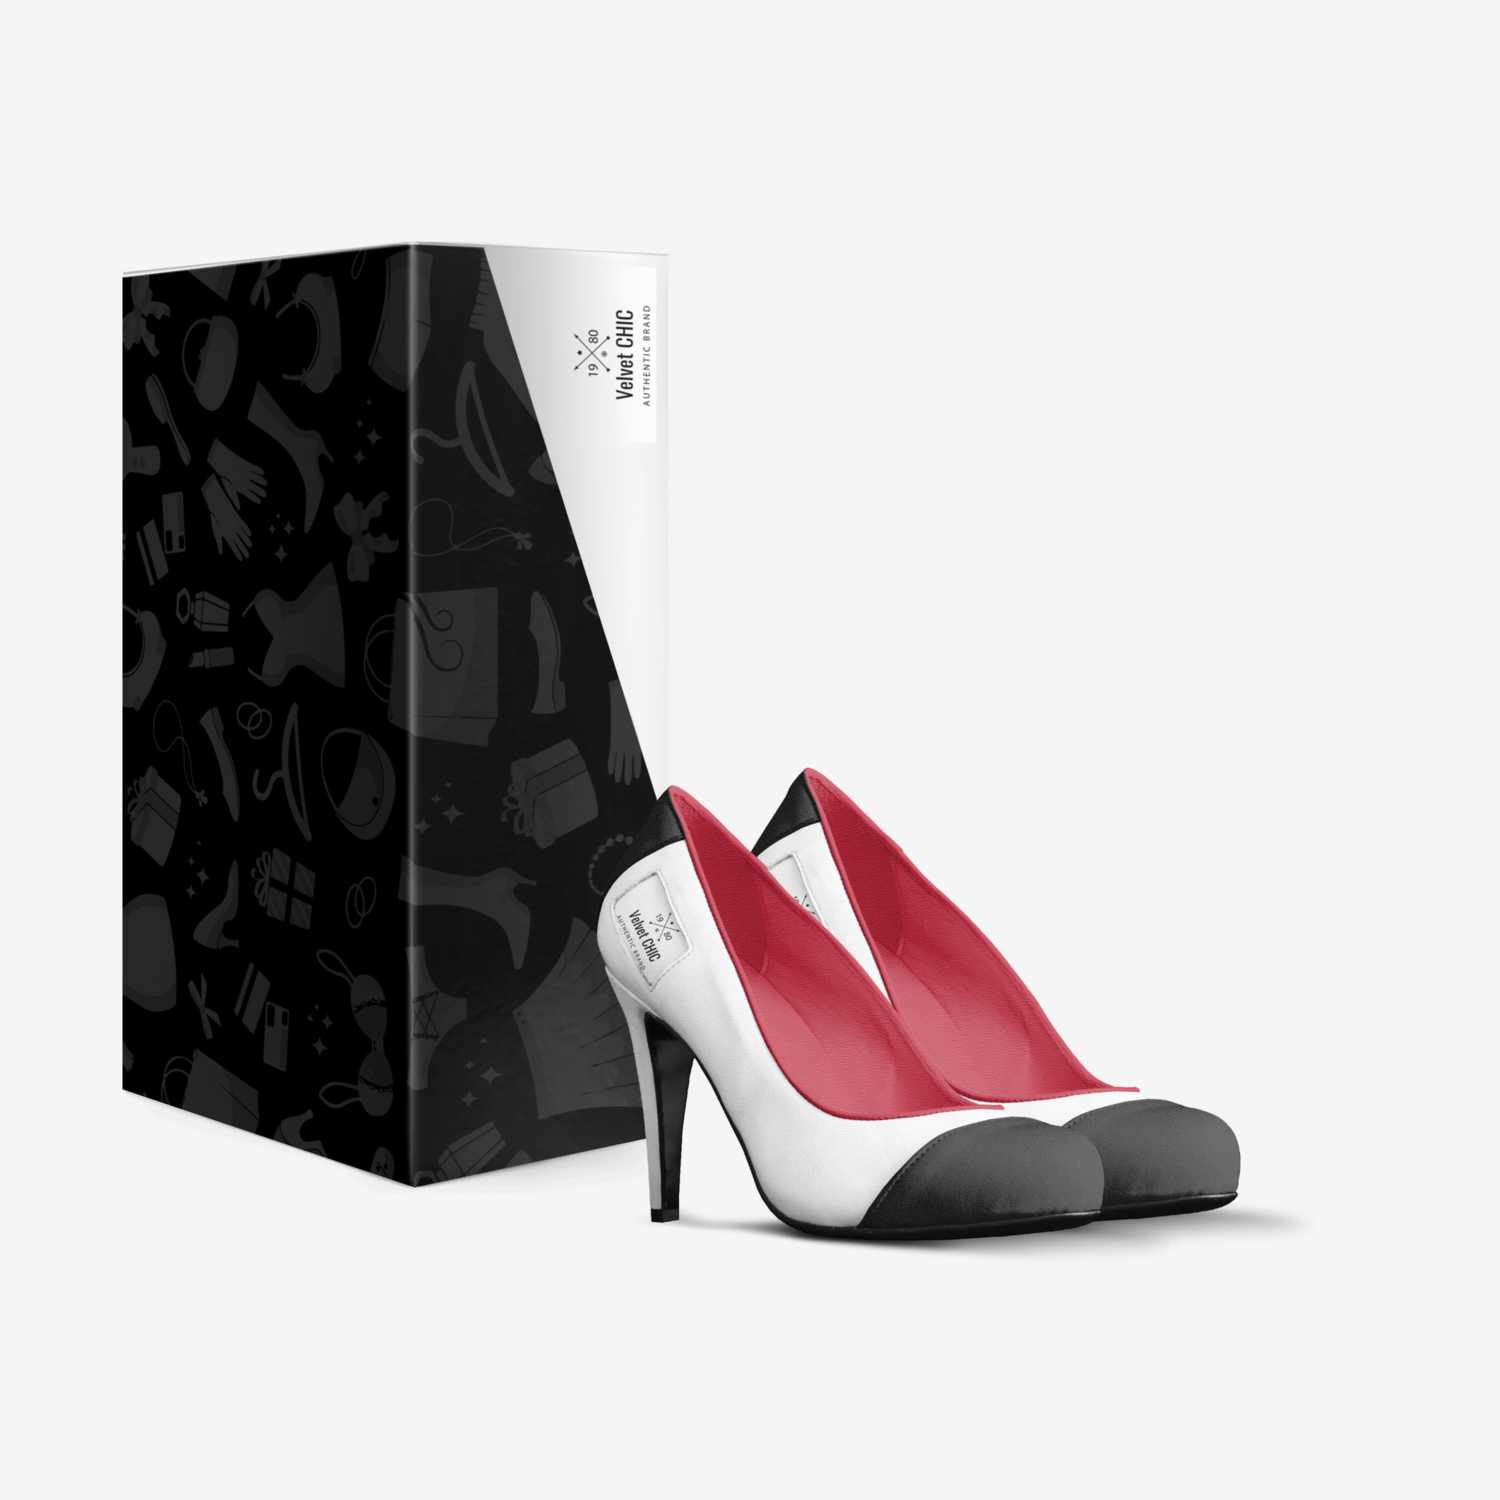 Velvet CHIC custom made in Italy shoes by Shantae Esannason | Box view